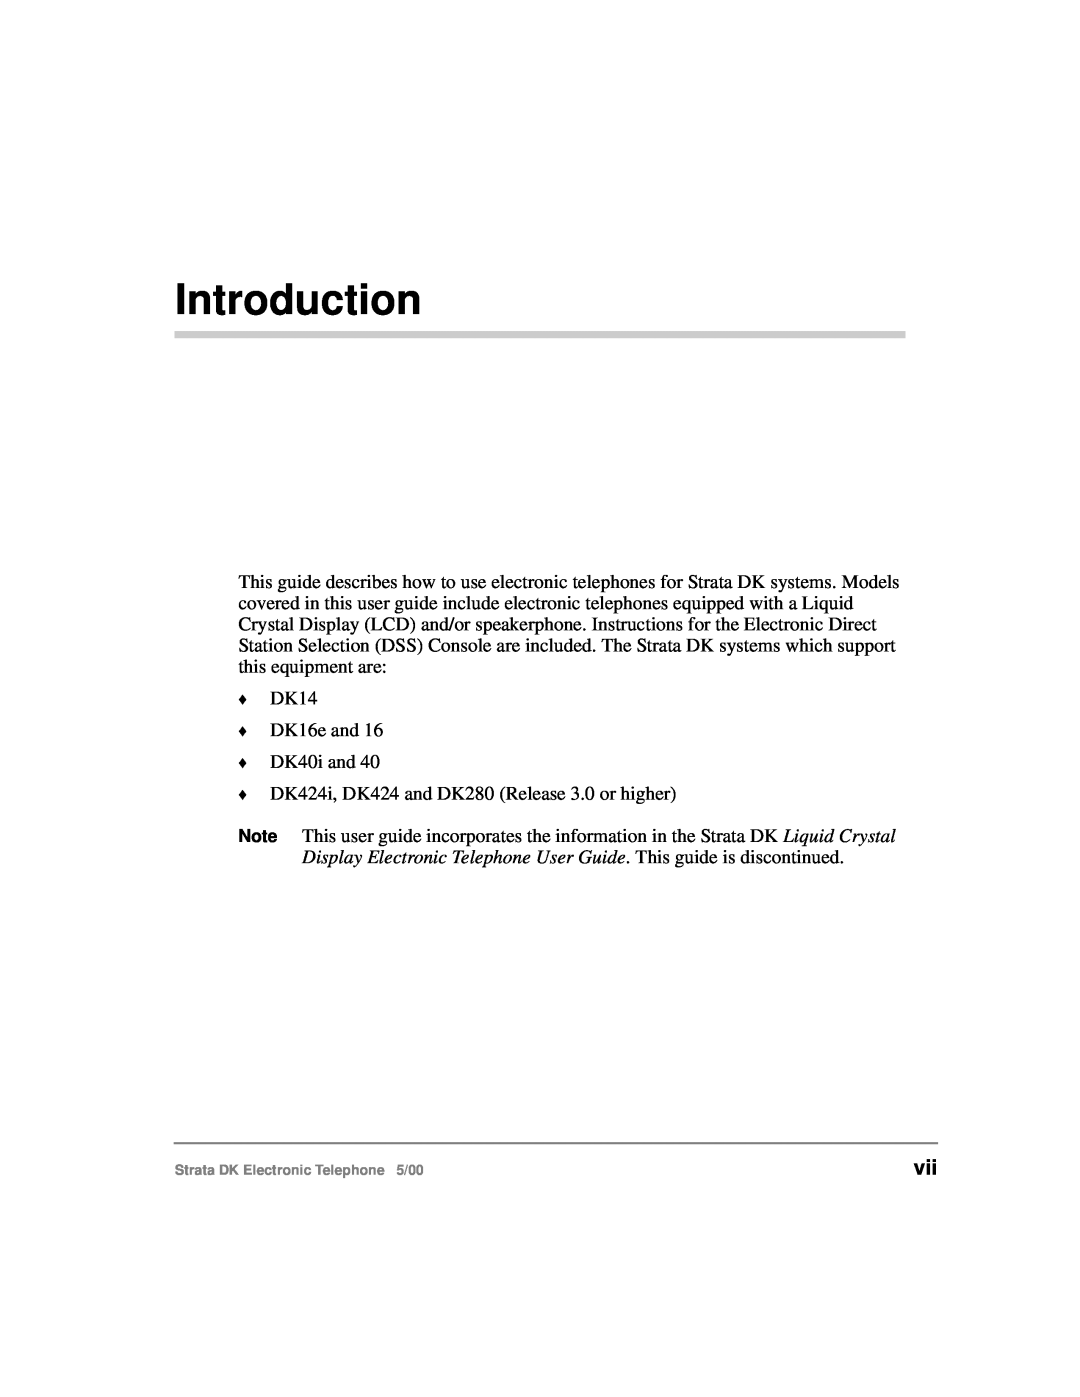 Toshiba Strata DK manual Introduction 